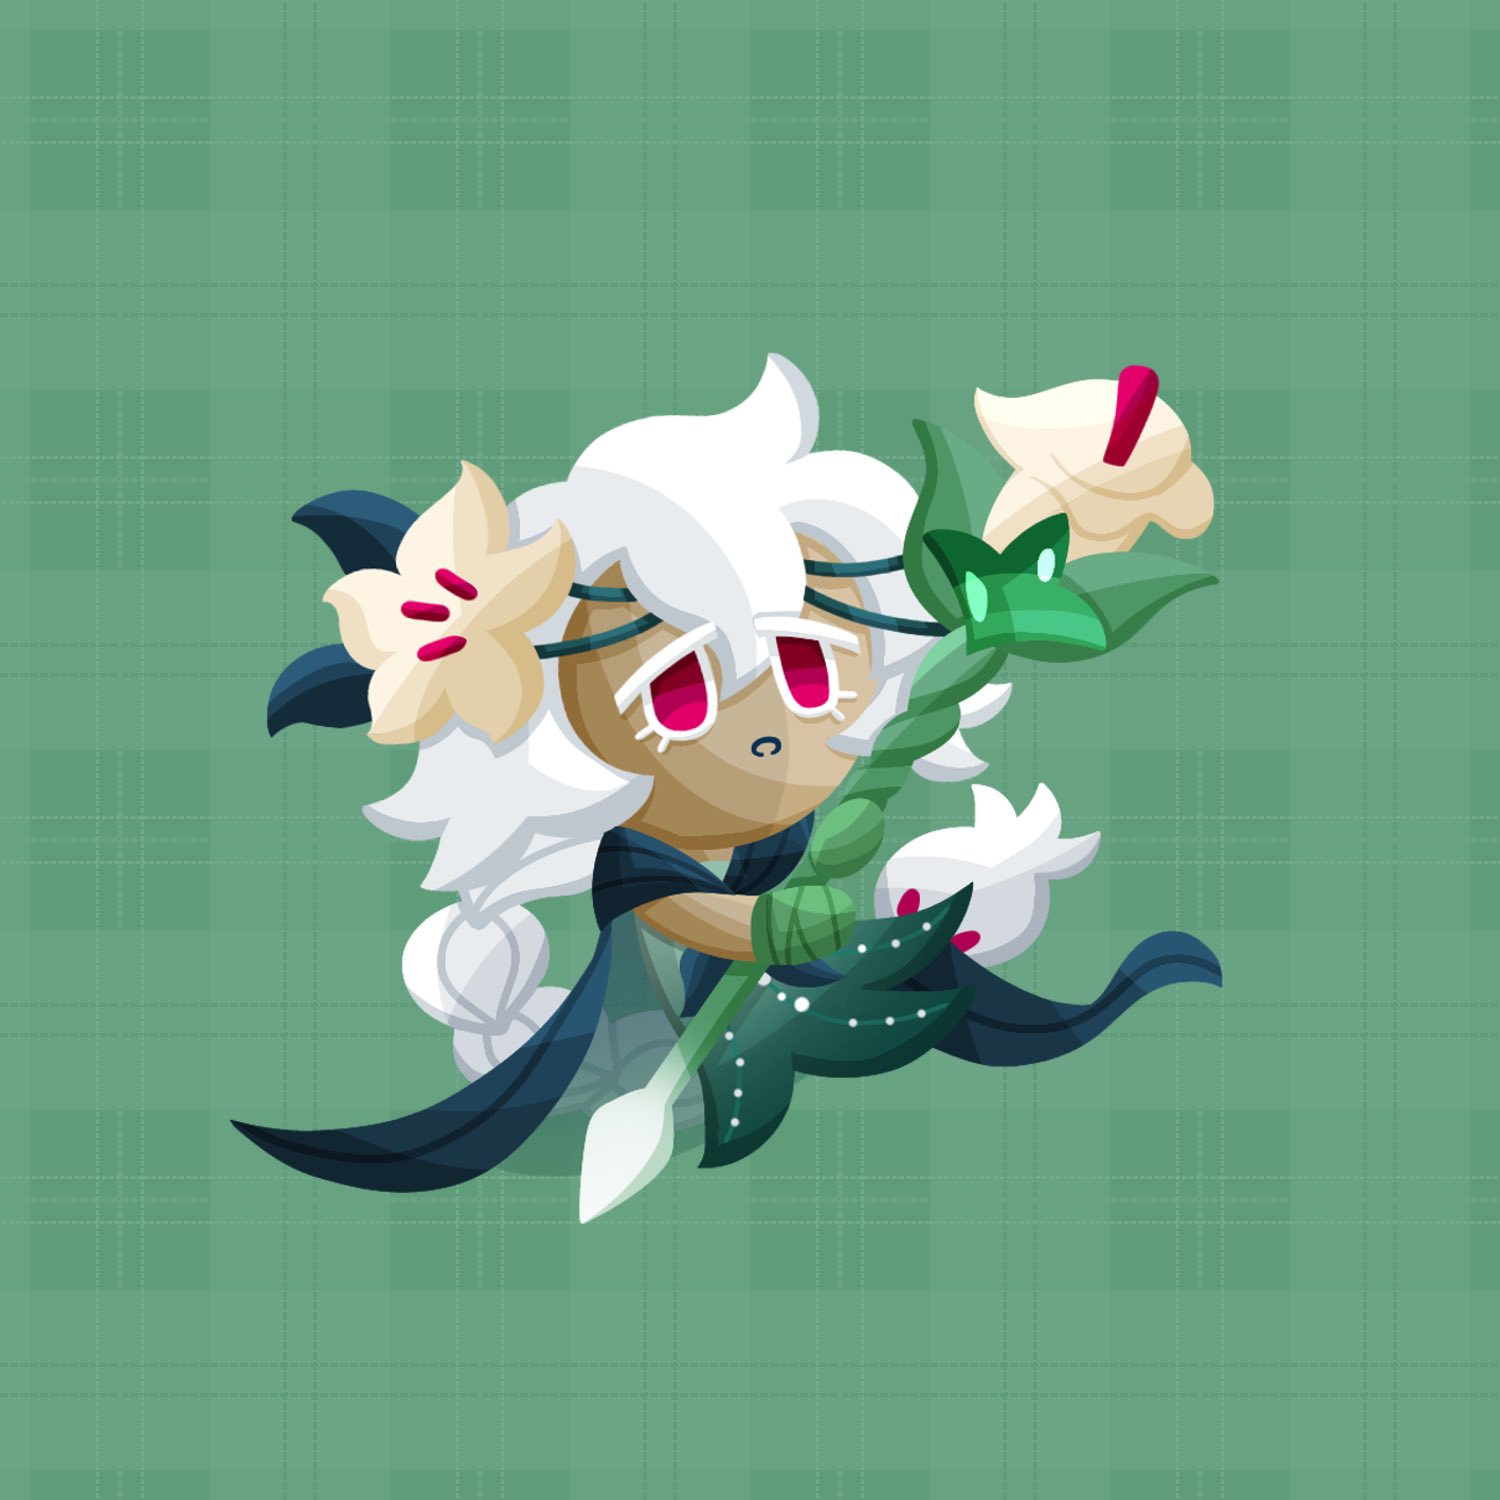 White Lily Cookie Run: Kingdom. Anime Image Board